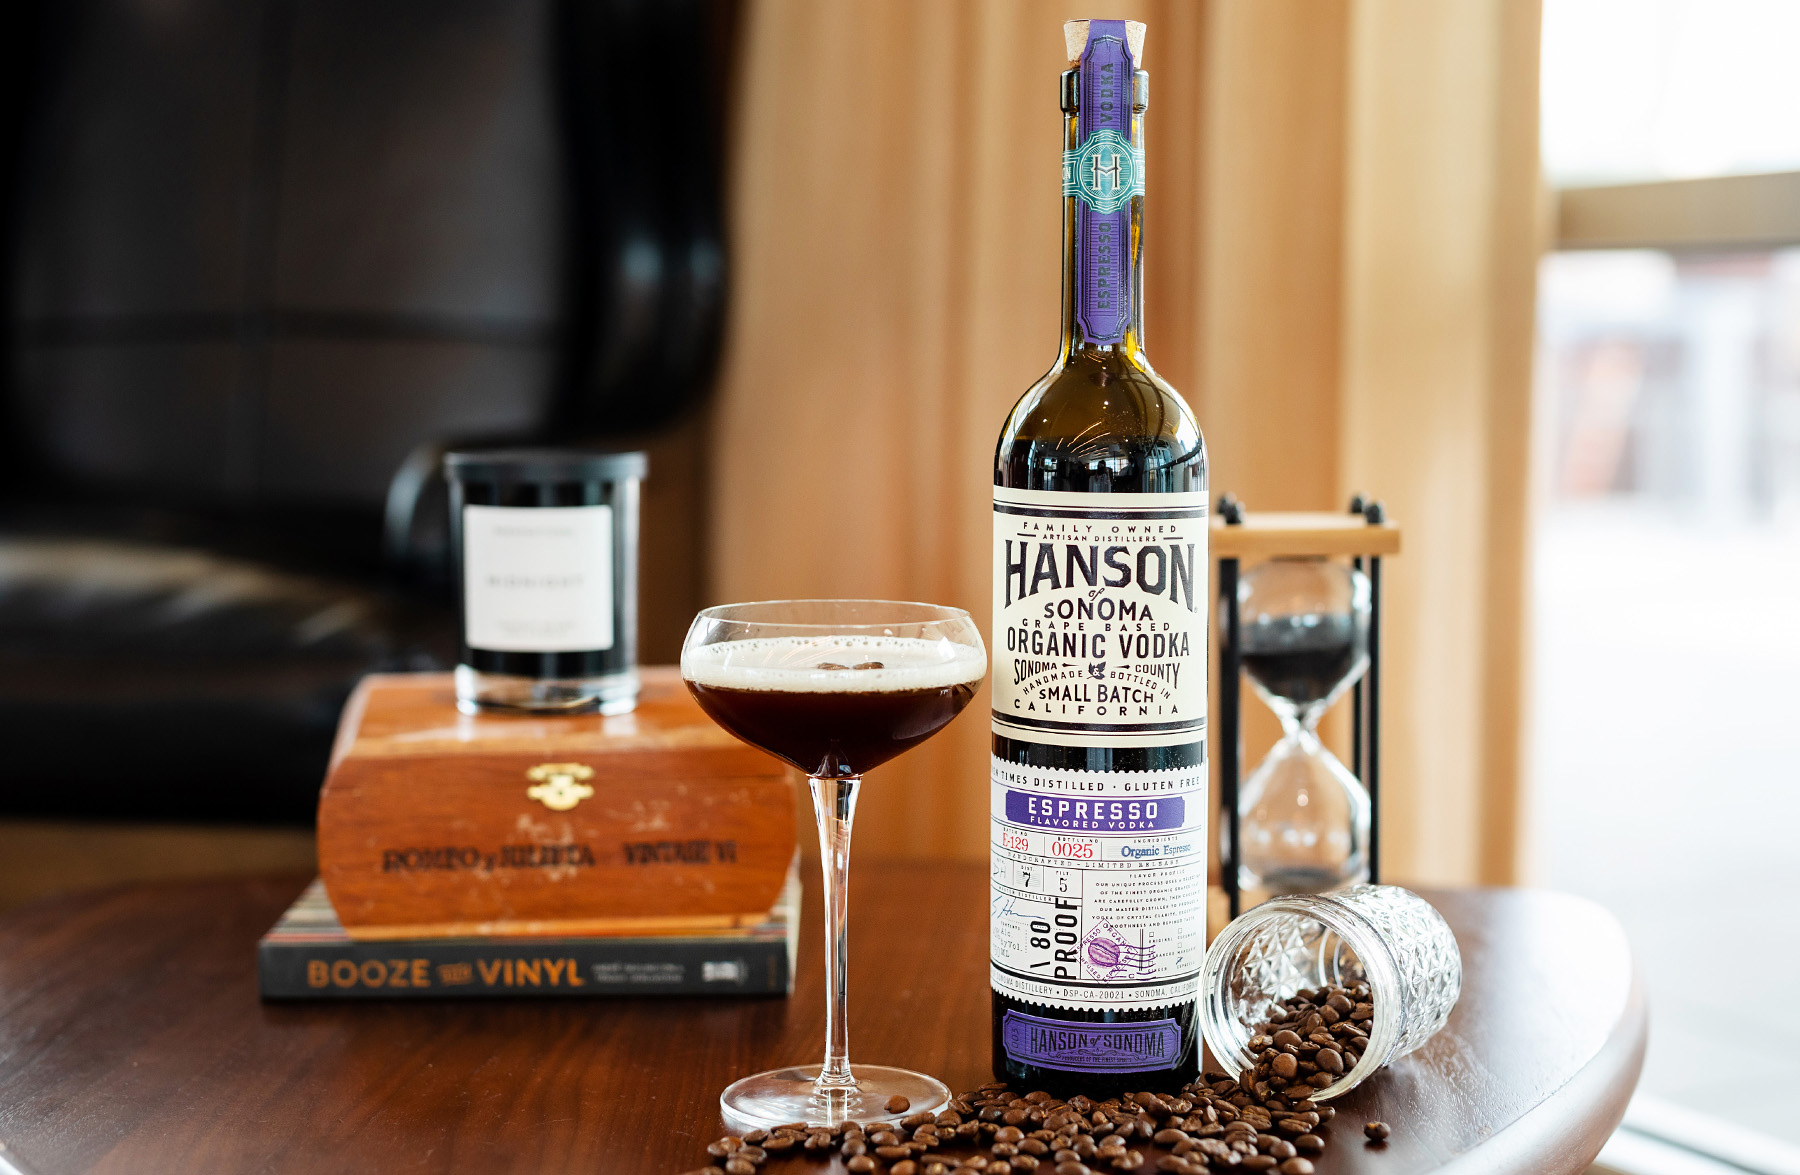 Hanson Vodka Liquor Product Photography